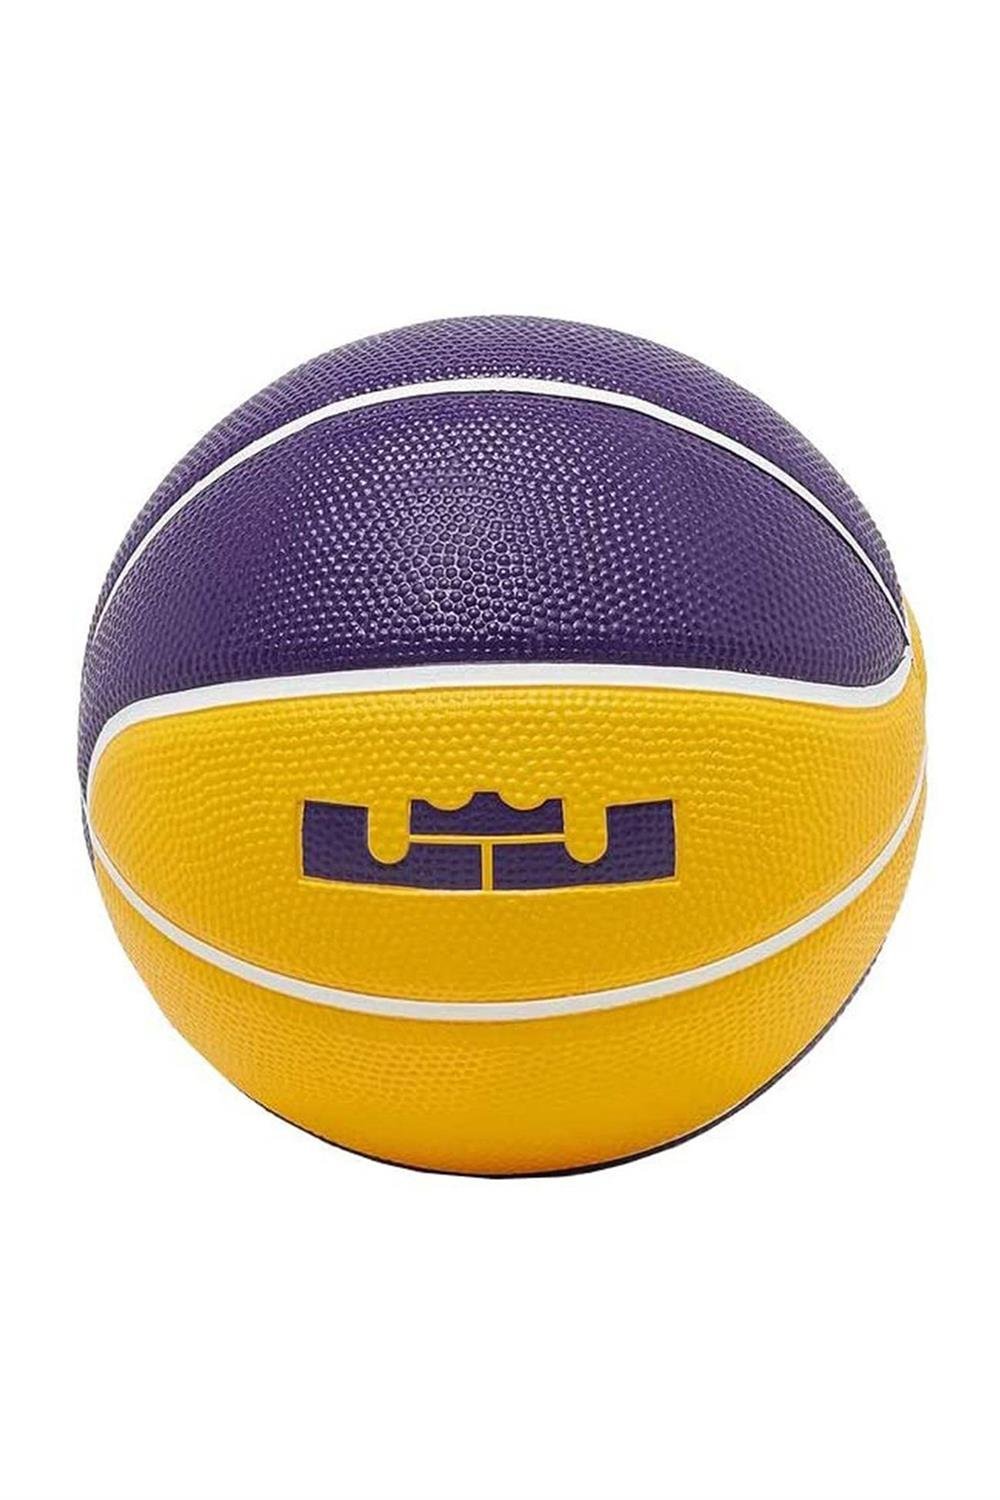 Nike Lebron Skills Unisex Sarı Basketbol Topu N.000.3144.728.03 |  Sporborsasi.com